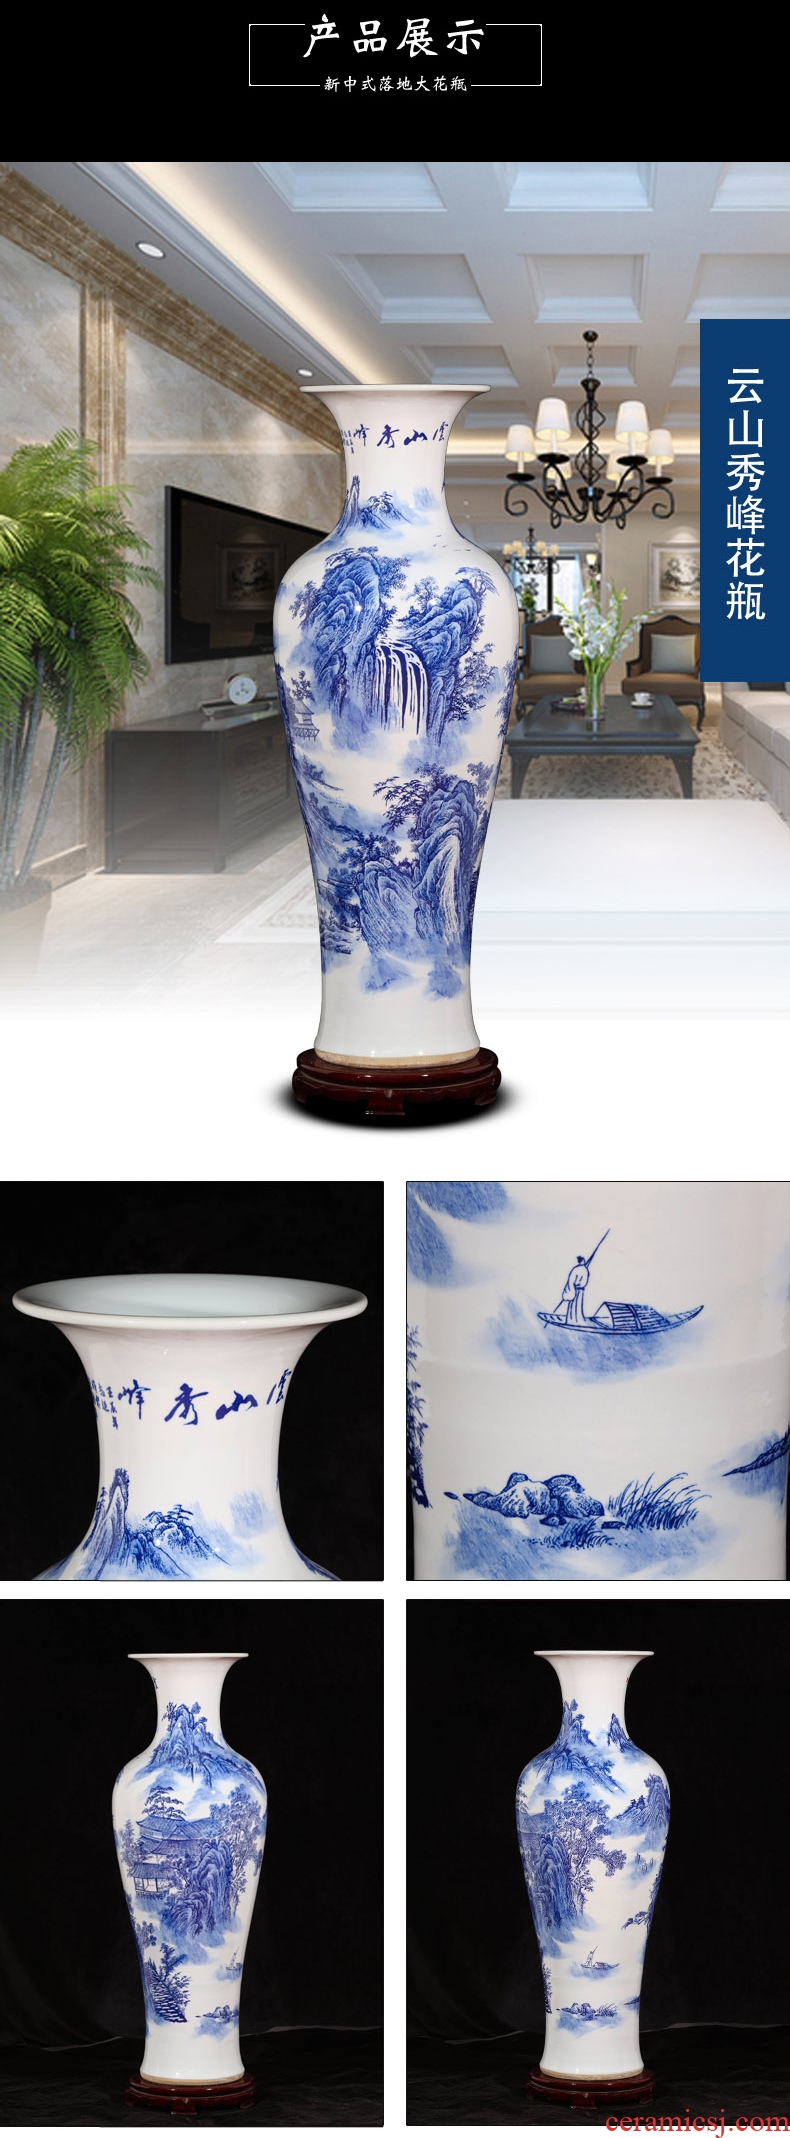 Jingdezhen ceramic big blue and white porcelain vase furnishing articles sitting room ground large flower arrangement home decoration to the hotel opening - 546402540640